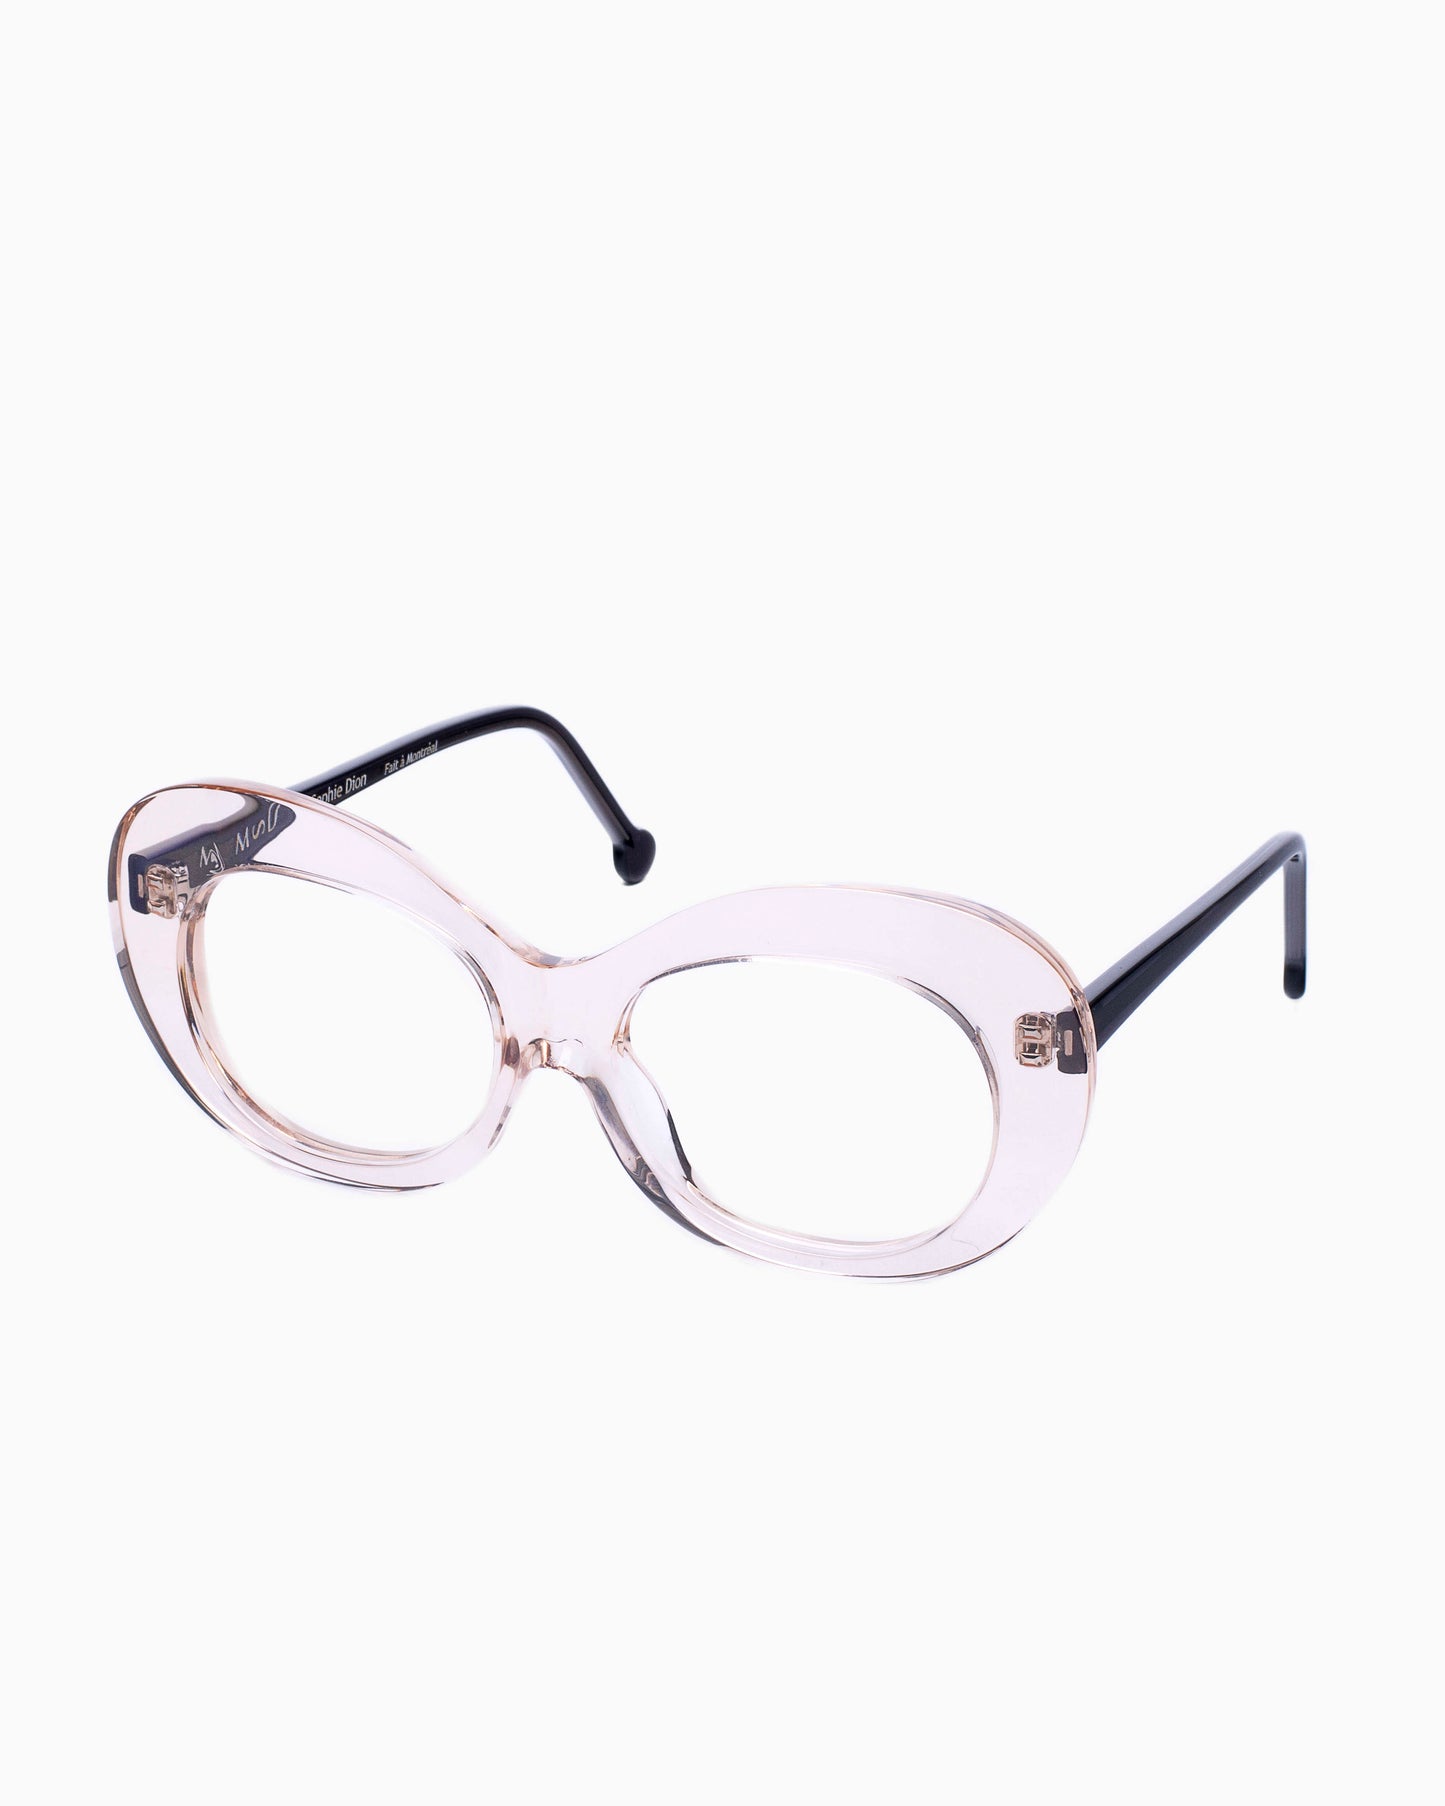 Marie-Sophie Dion - Morin - Crb | glasses bar